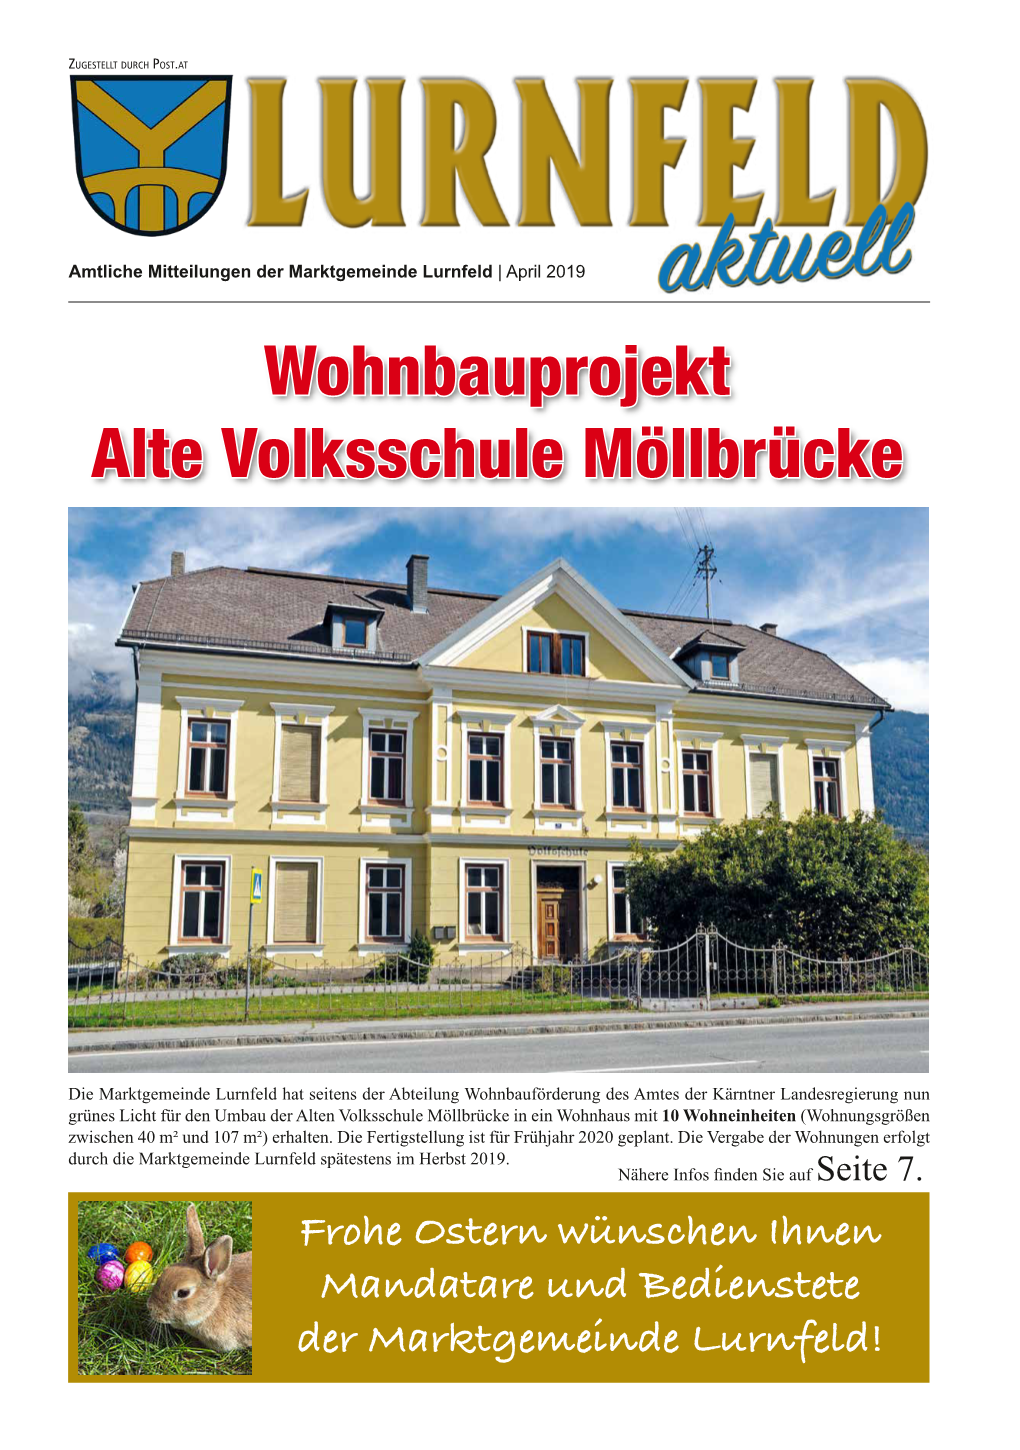 Wohnbauprojekt Alte Volksschule Möllbrücke